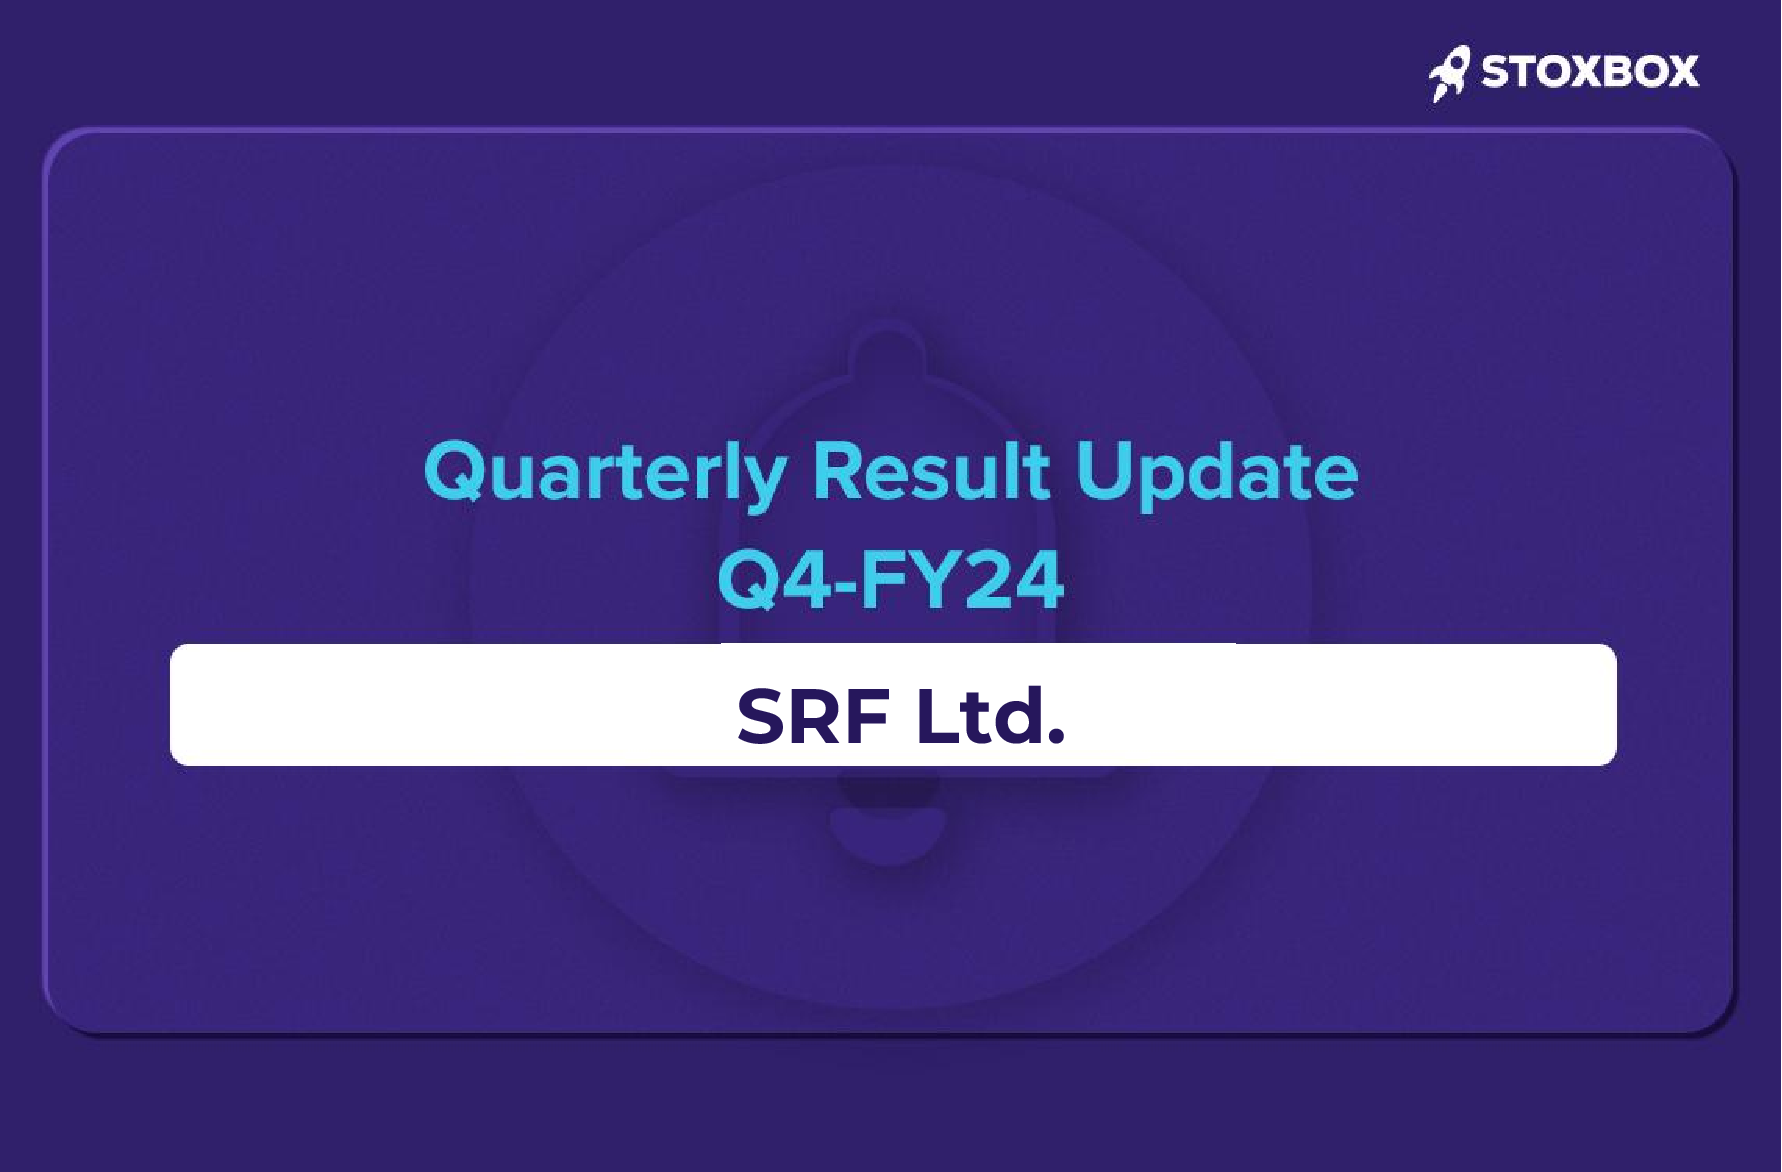 SRF Ltd. quarterly results